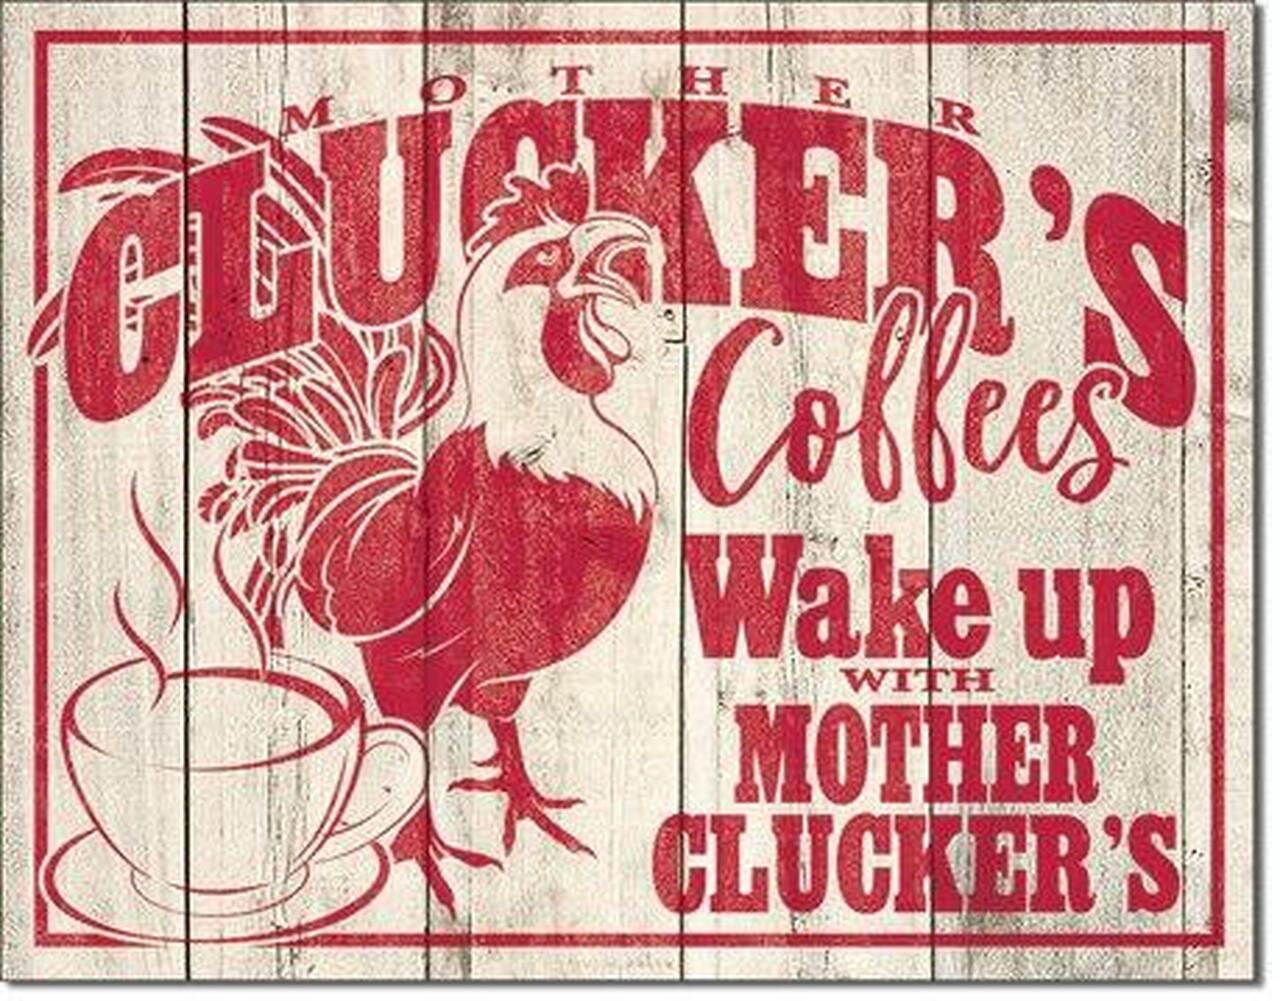 Clucker's Coffees 16" x 12.5" Metal Tin Sign - 2317